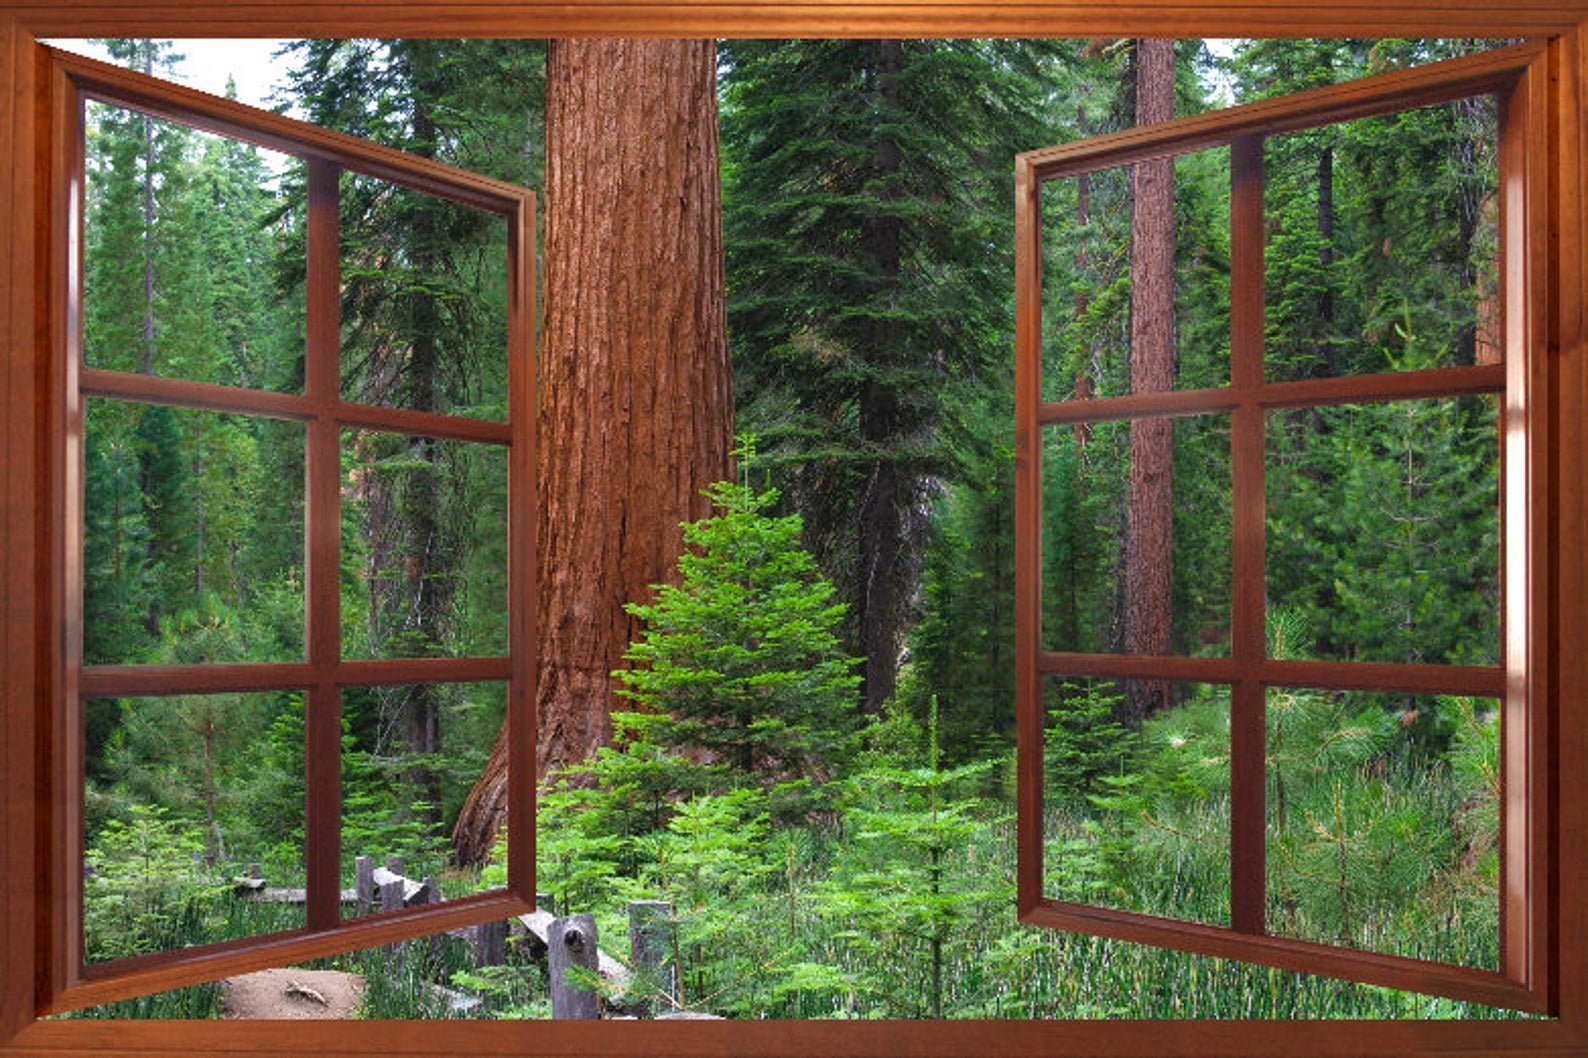 Из окна видна река. Вид из окна на лес. Лес за окном. Панорамное окно с видом на лес. Окно с видом на Сосновый лес.